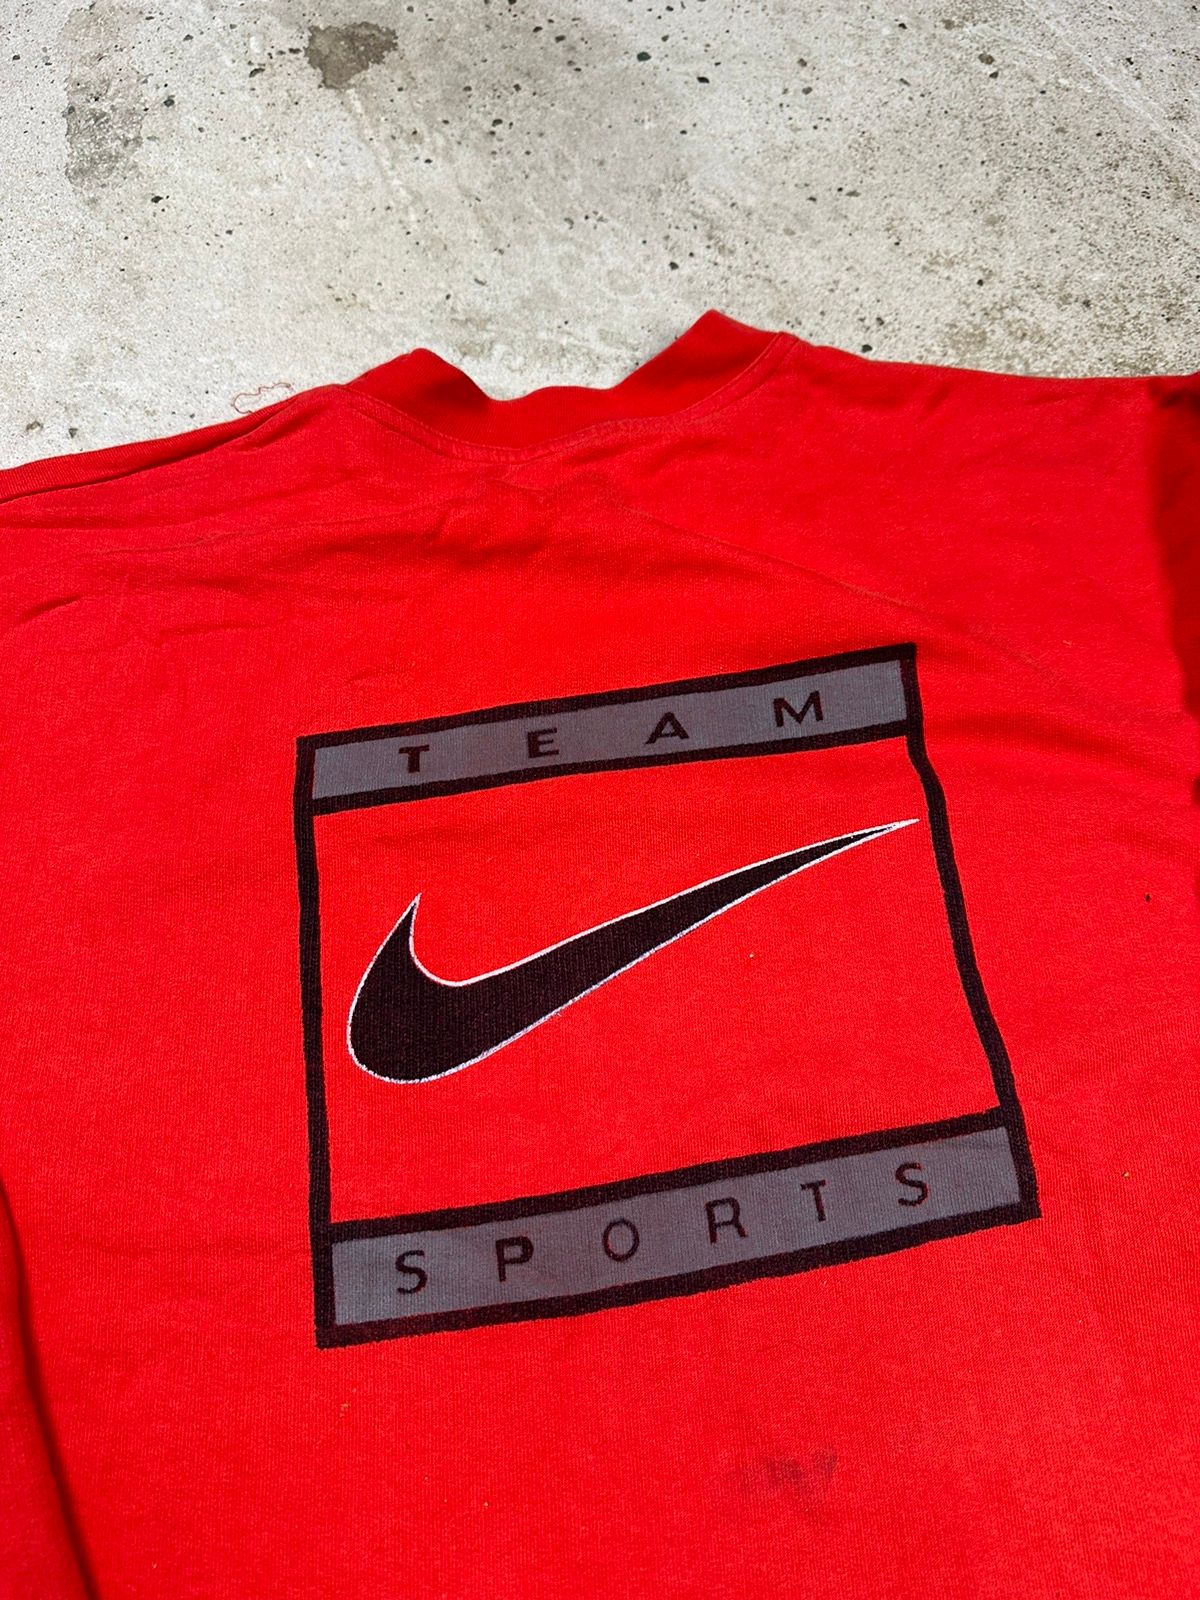 Nike ‼️ Vintage 90s Nike Duke Red Trashed Crewneck Bootleg Size US L / EU 52-54 / 3 - 7 Thumbnail